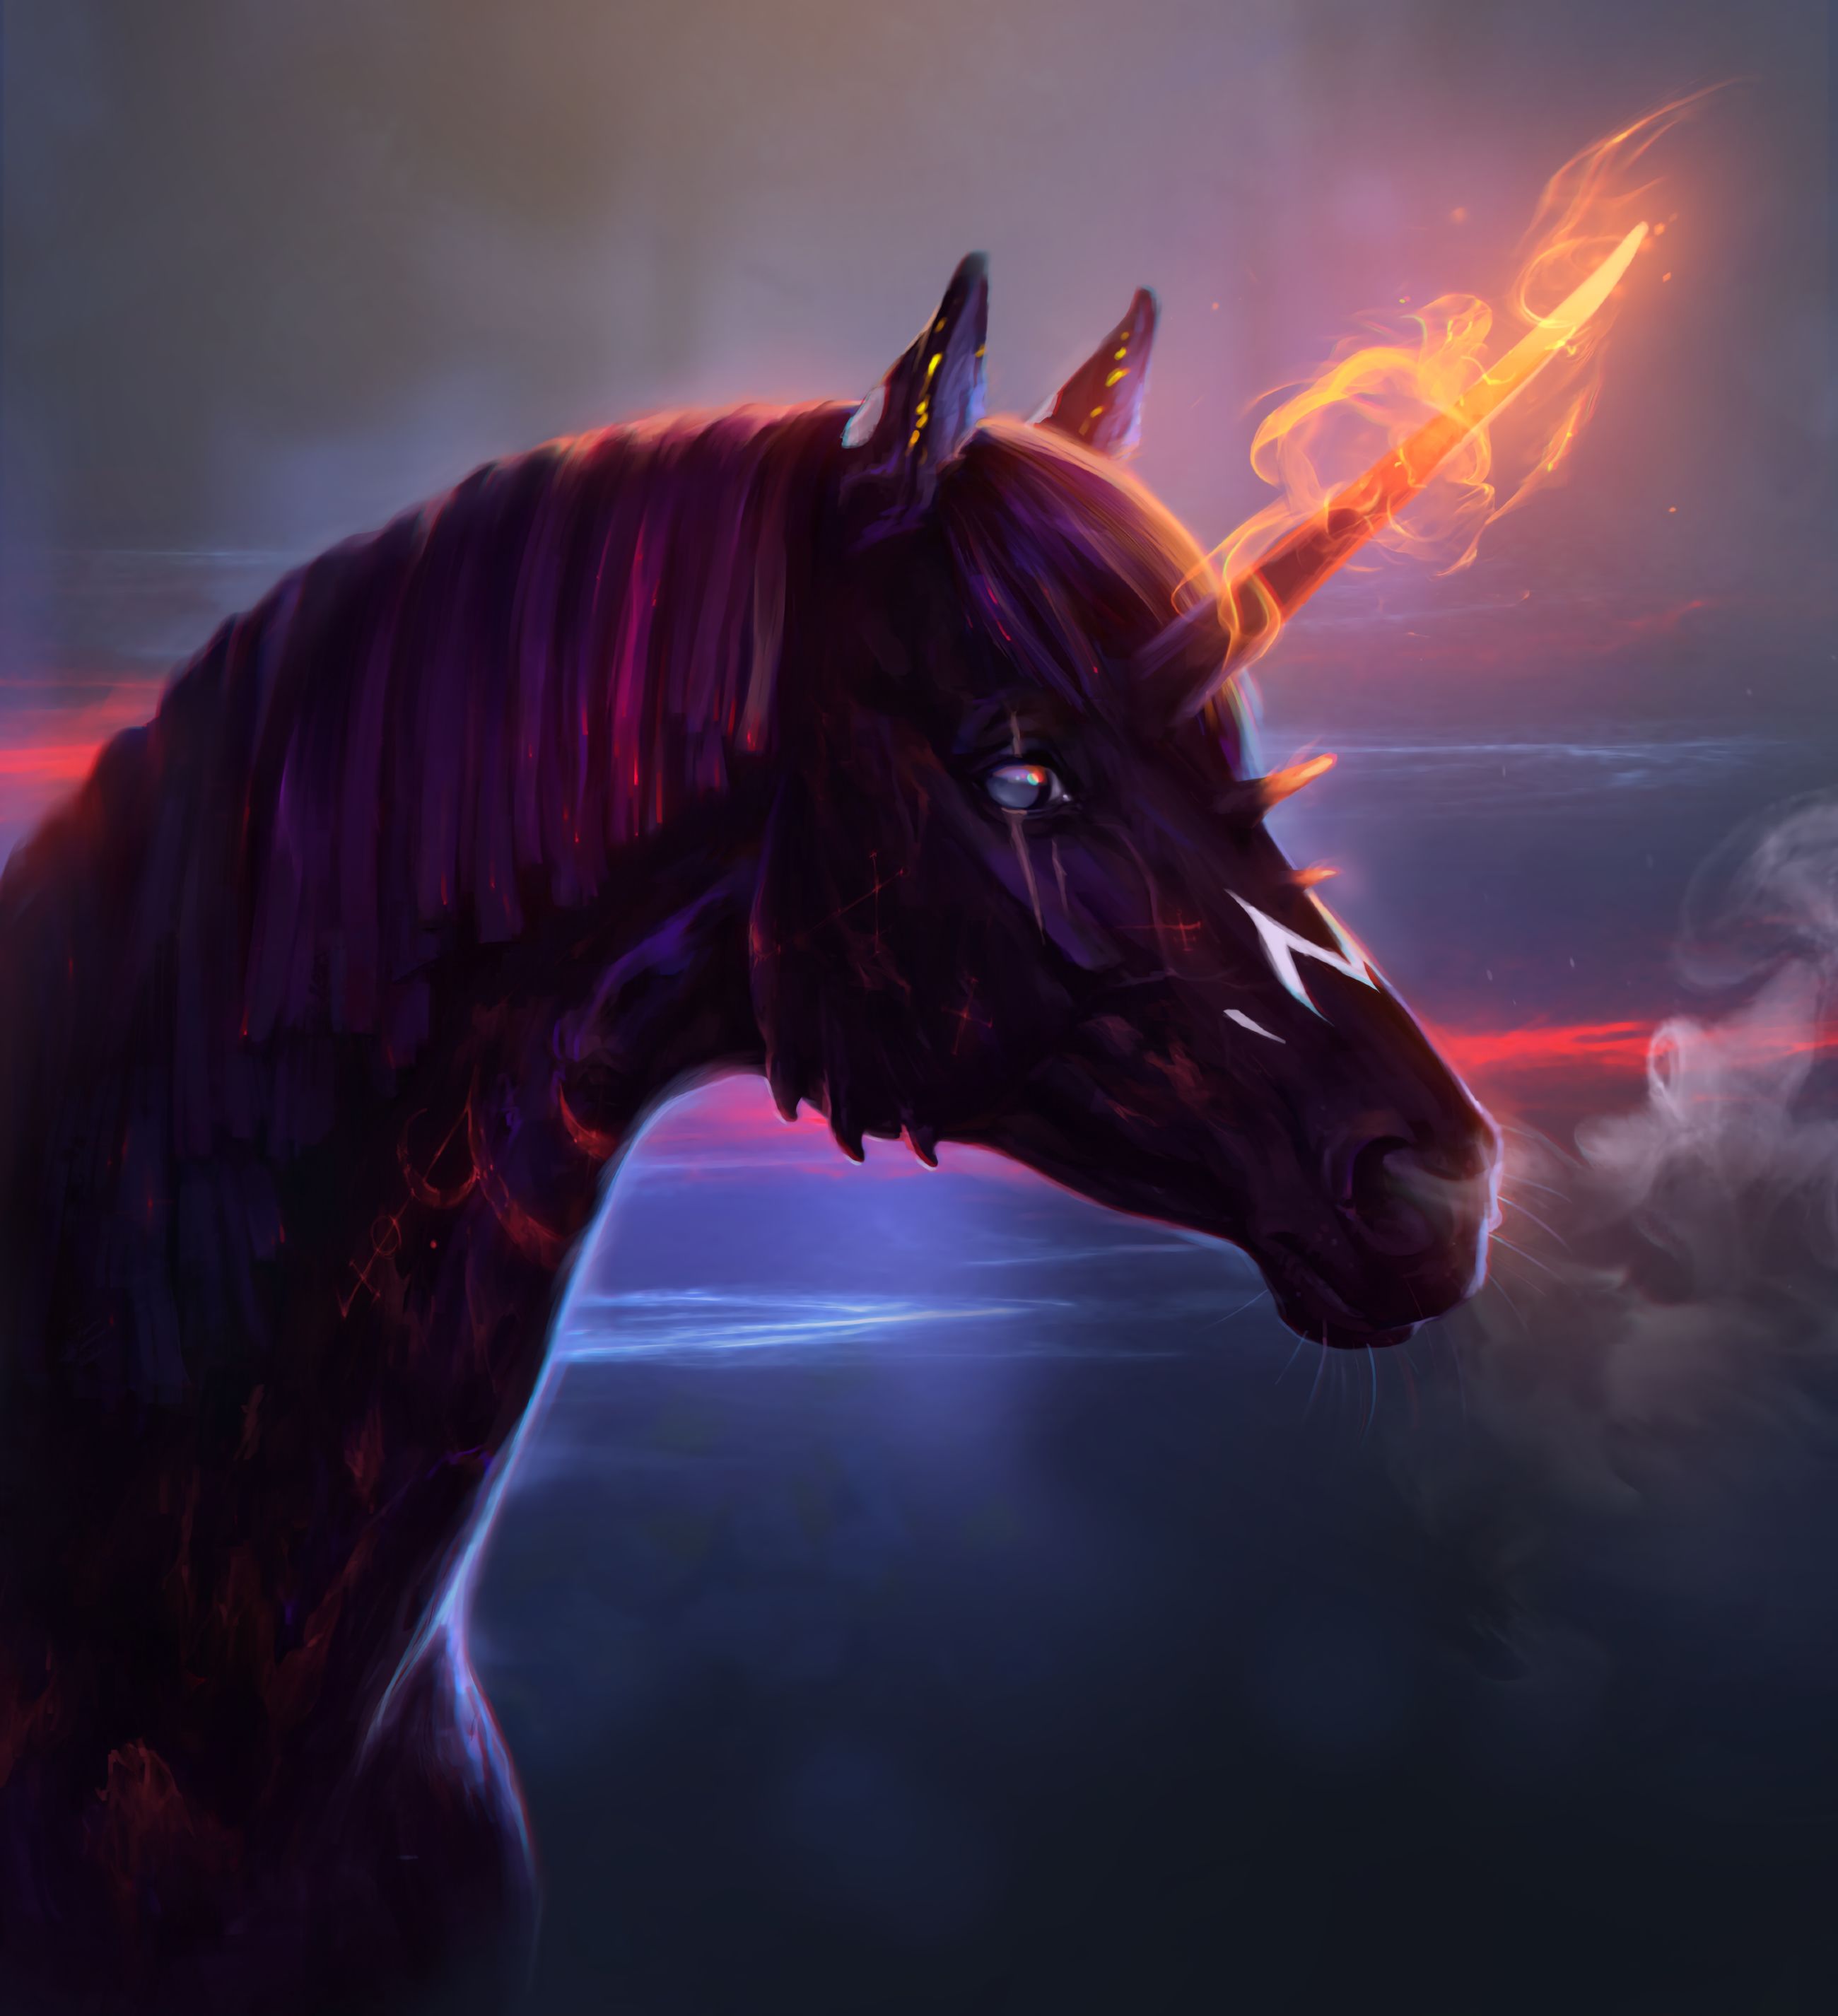 122629 descargar imagen unicornio, arte, fuego, caballo: fondos de pantalla y protectores de pantalla gratis